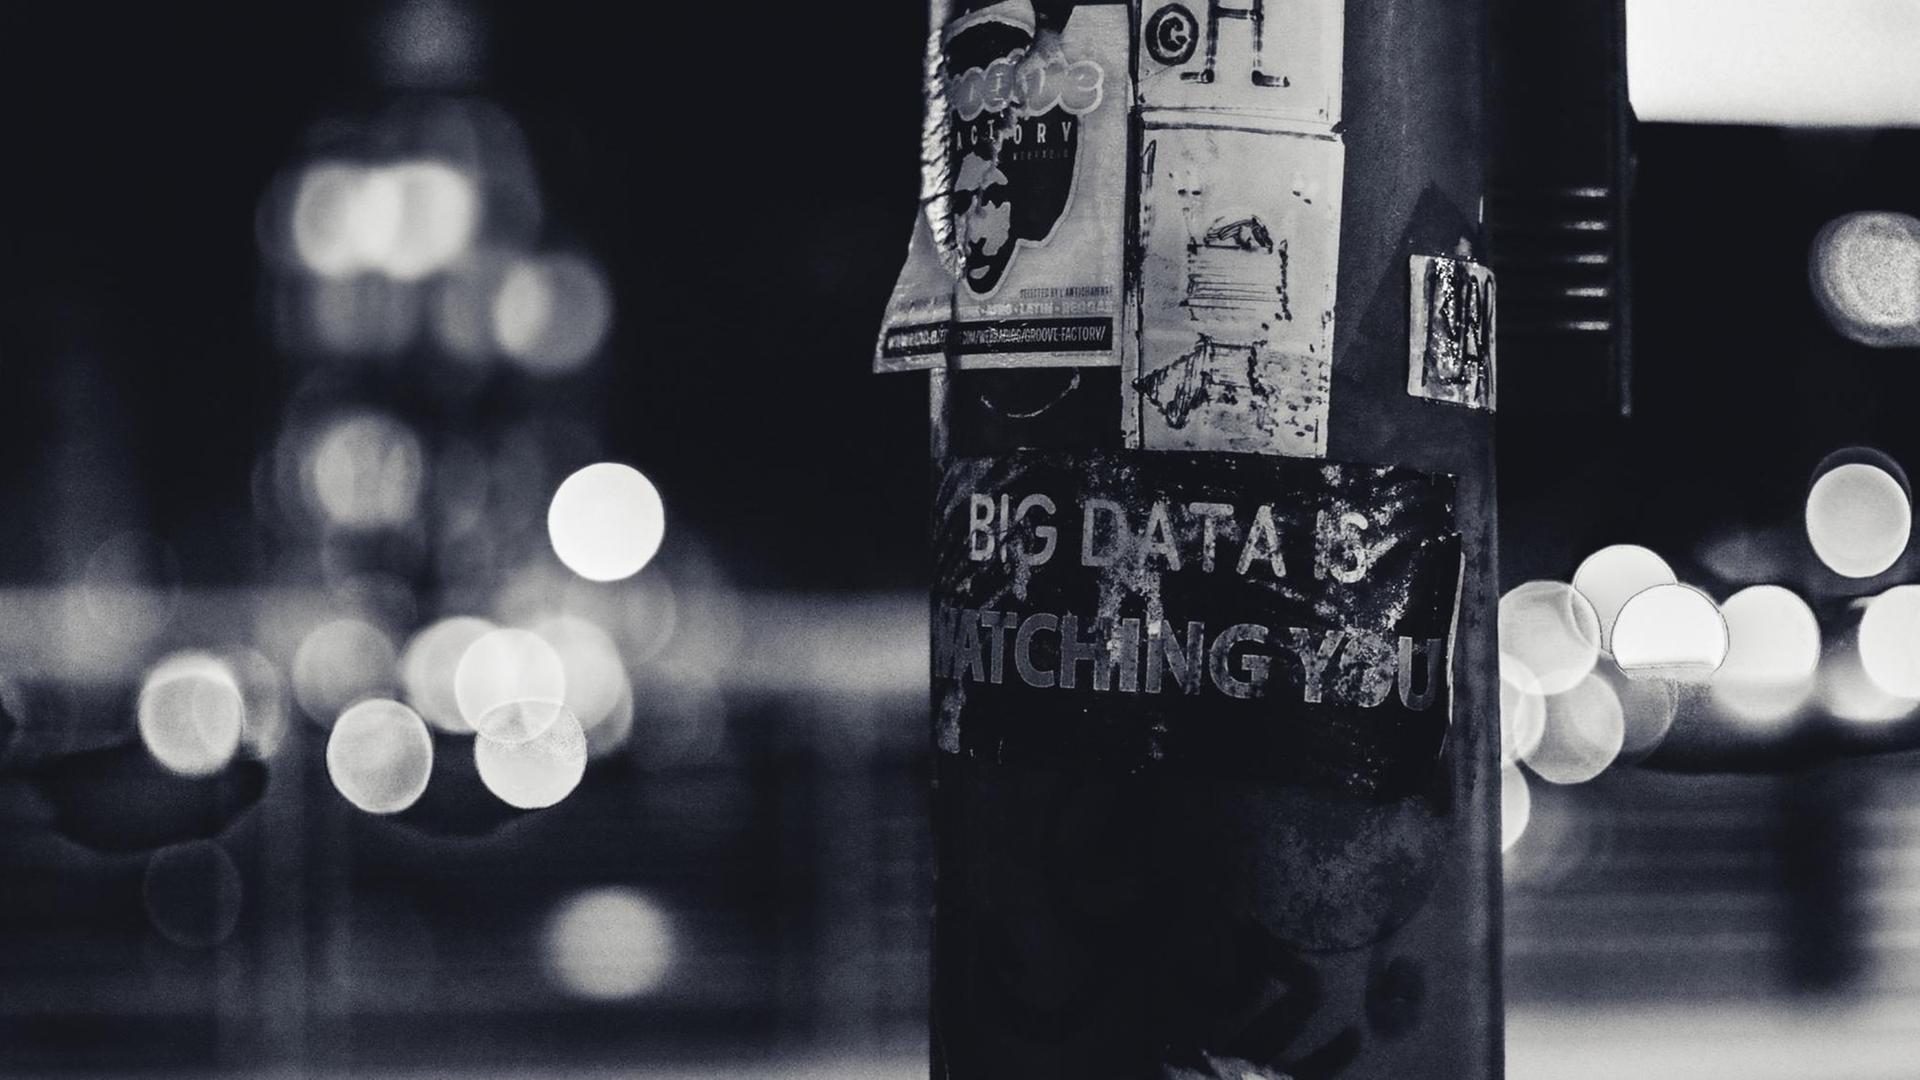 "Big Data is watching you" - Aufkleber an Straßenlaterne